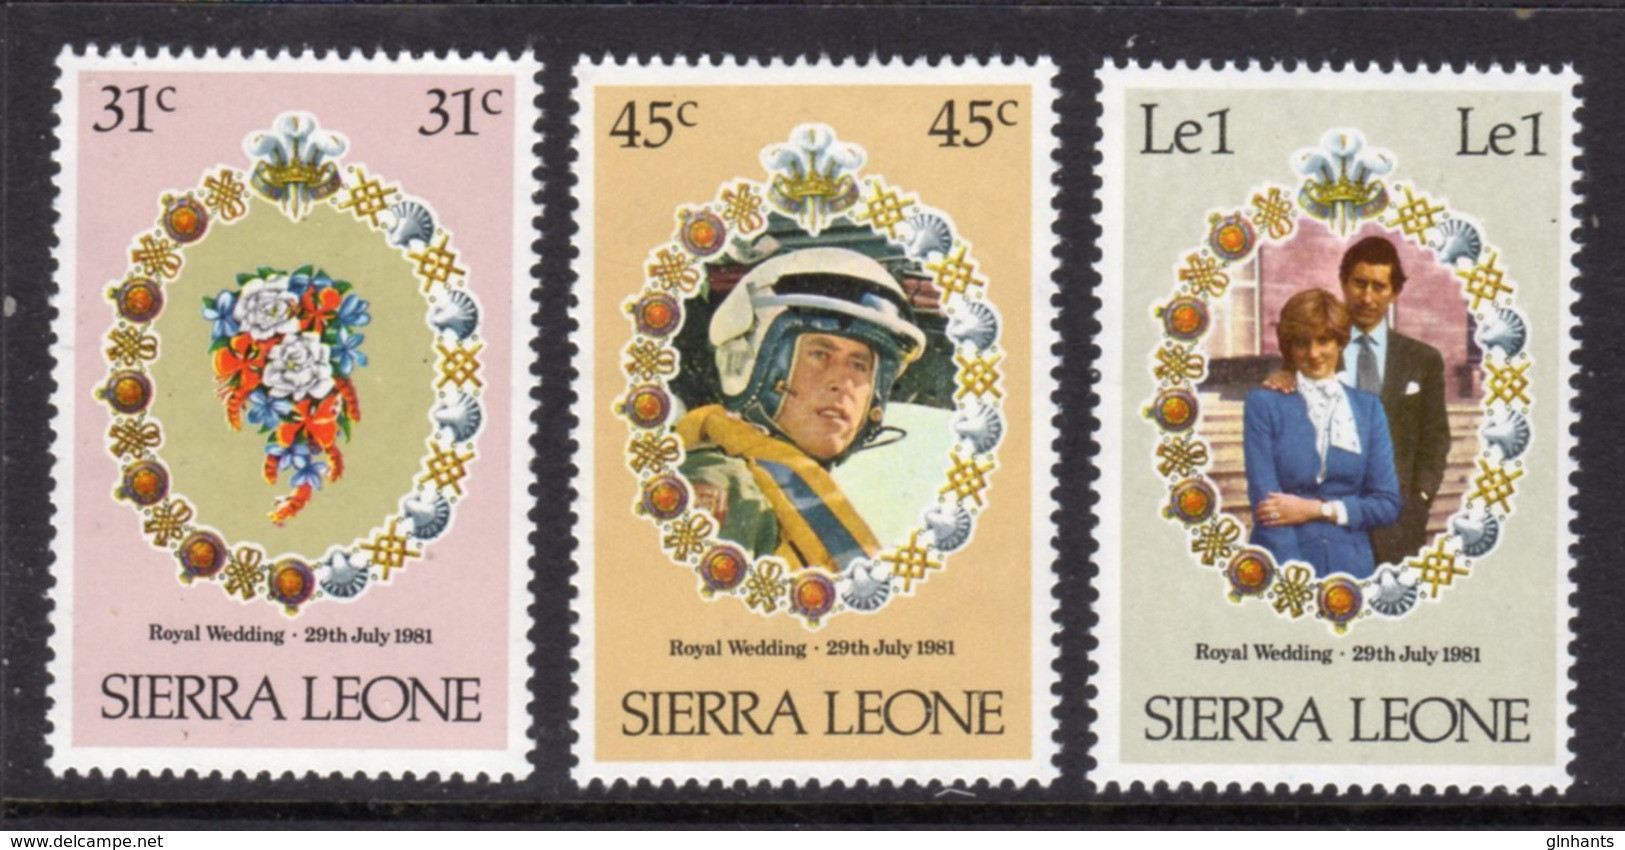 SIERRA LEONE - 1981 ROYAL WEDDING SET (3V) FINE MNH ** SG 668-670 - Sierra Leone (1961-...)